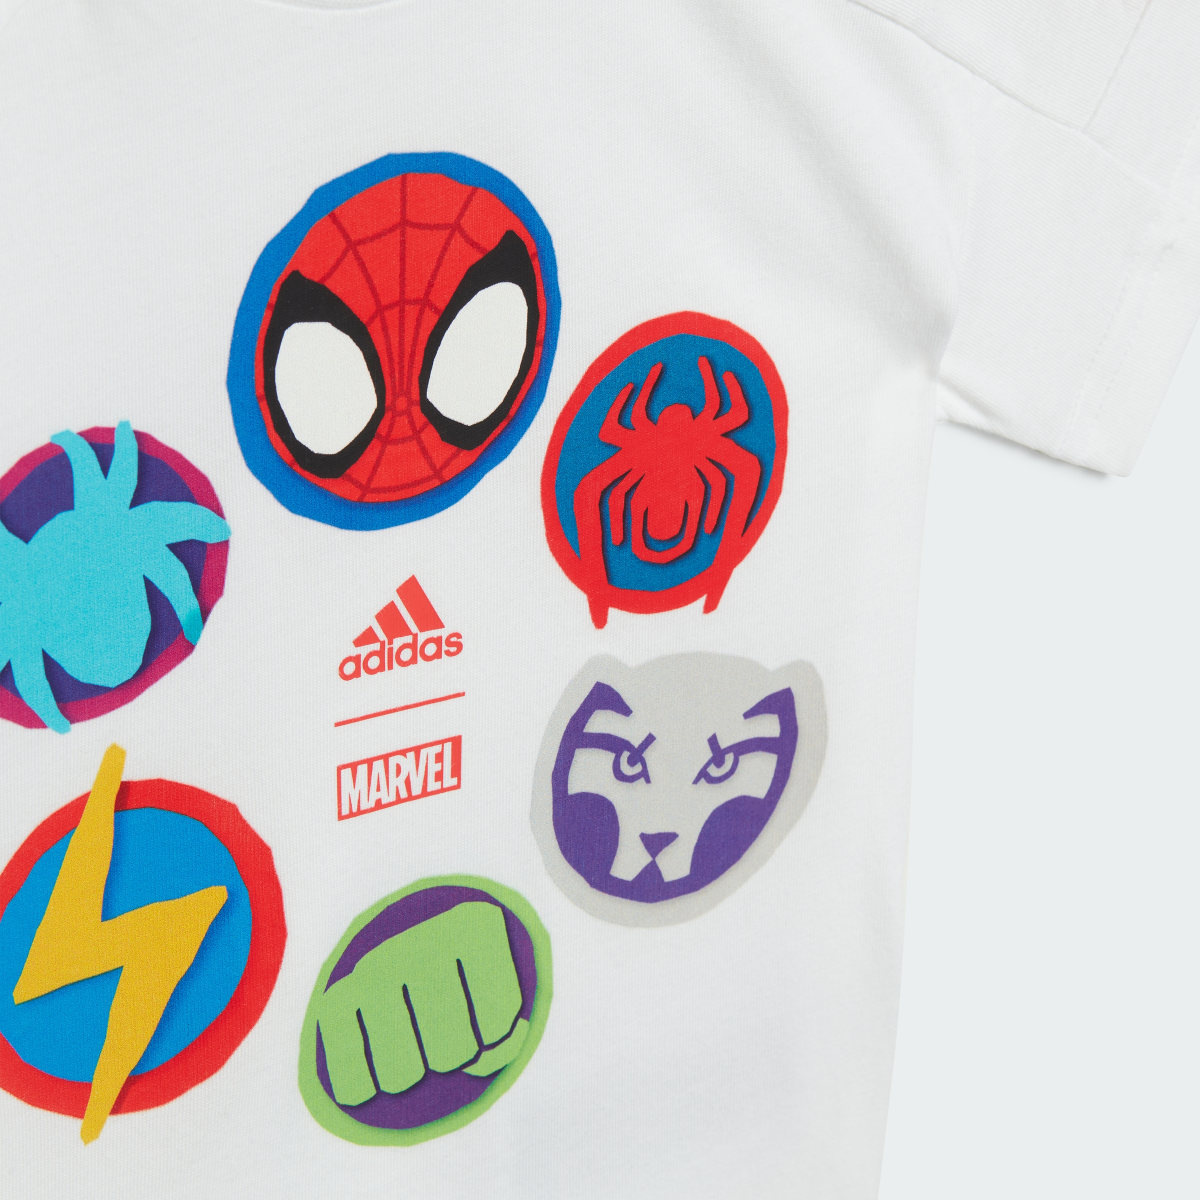 Adidas x Marvel Spider-Man Tee and Shorts Set. 8